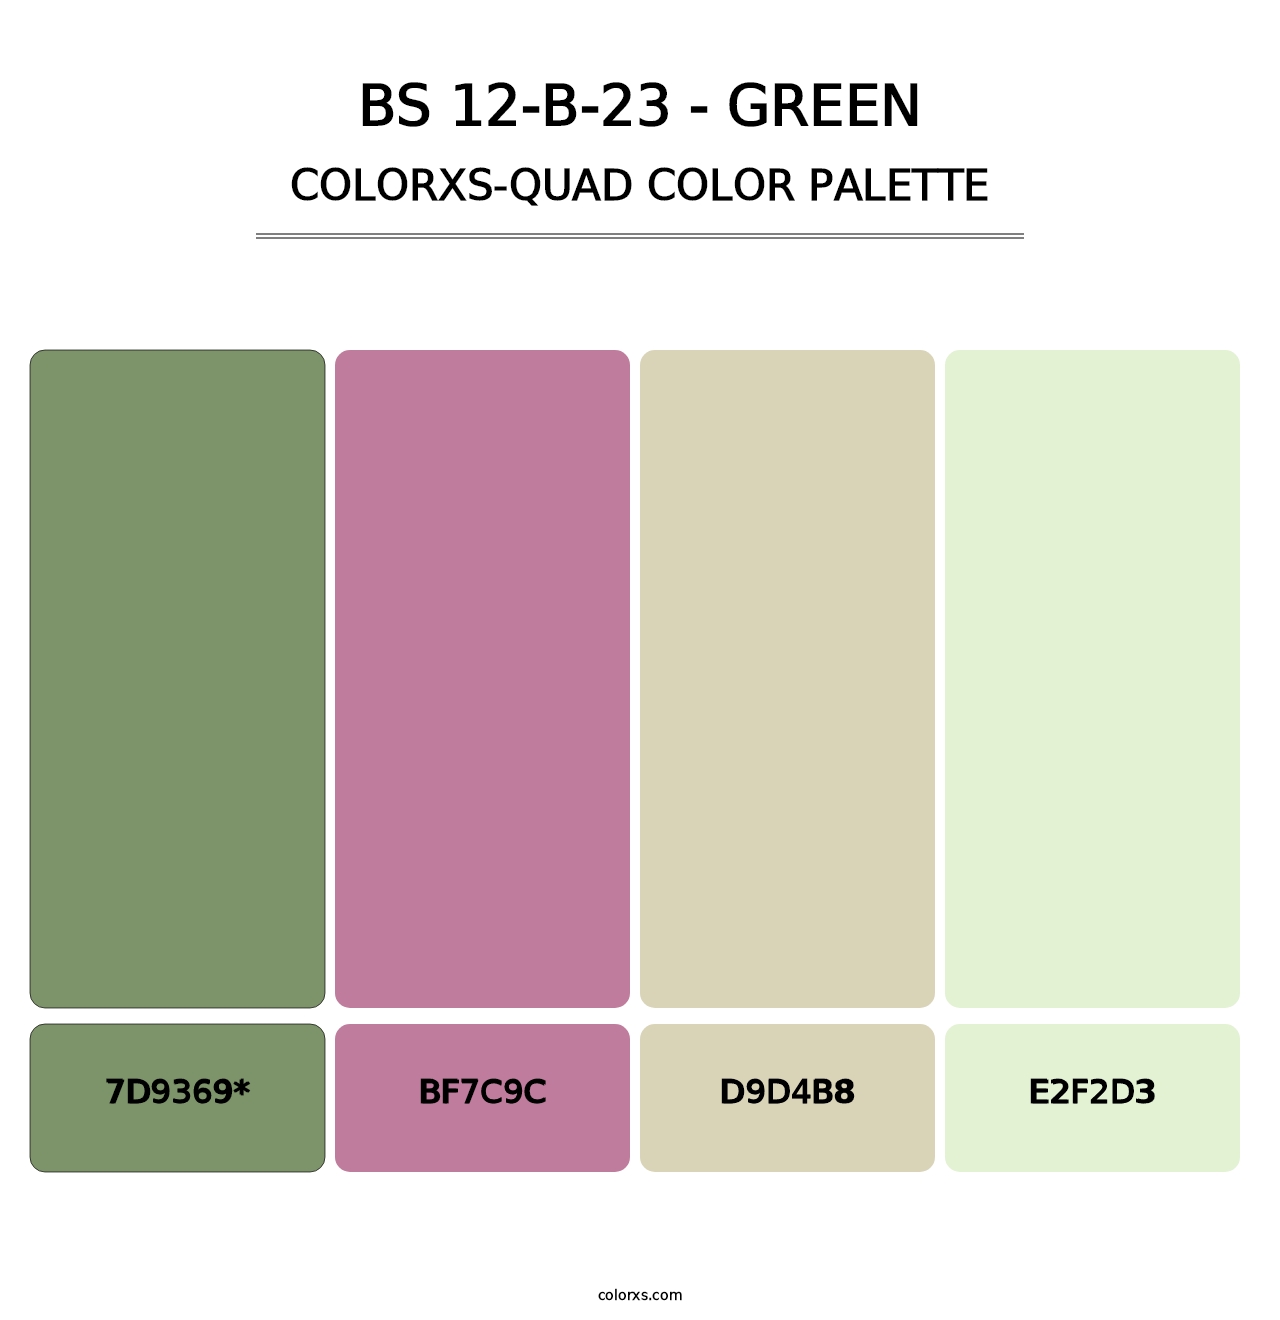 BS 12-B-23 - Green - Colorxs Quad Palette